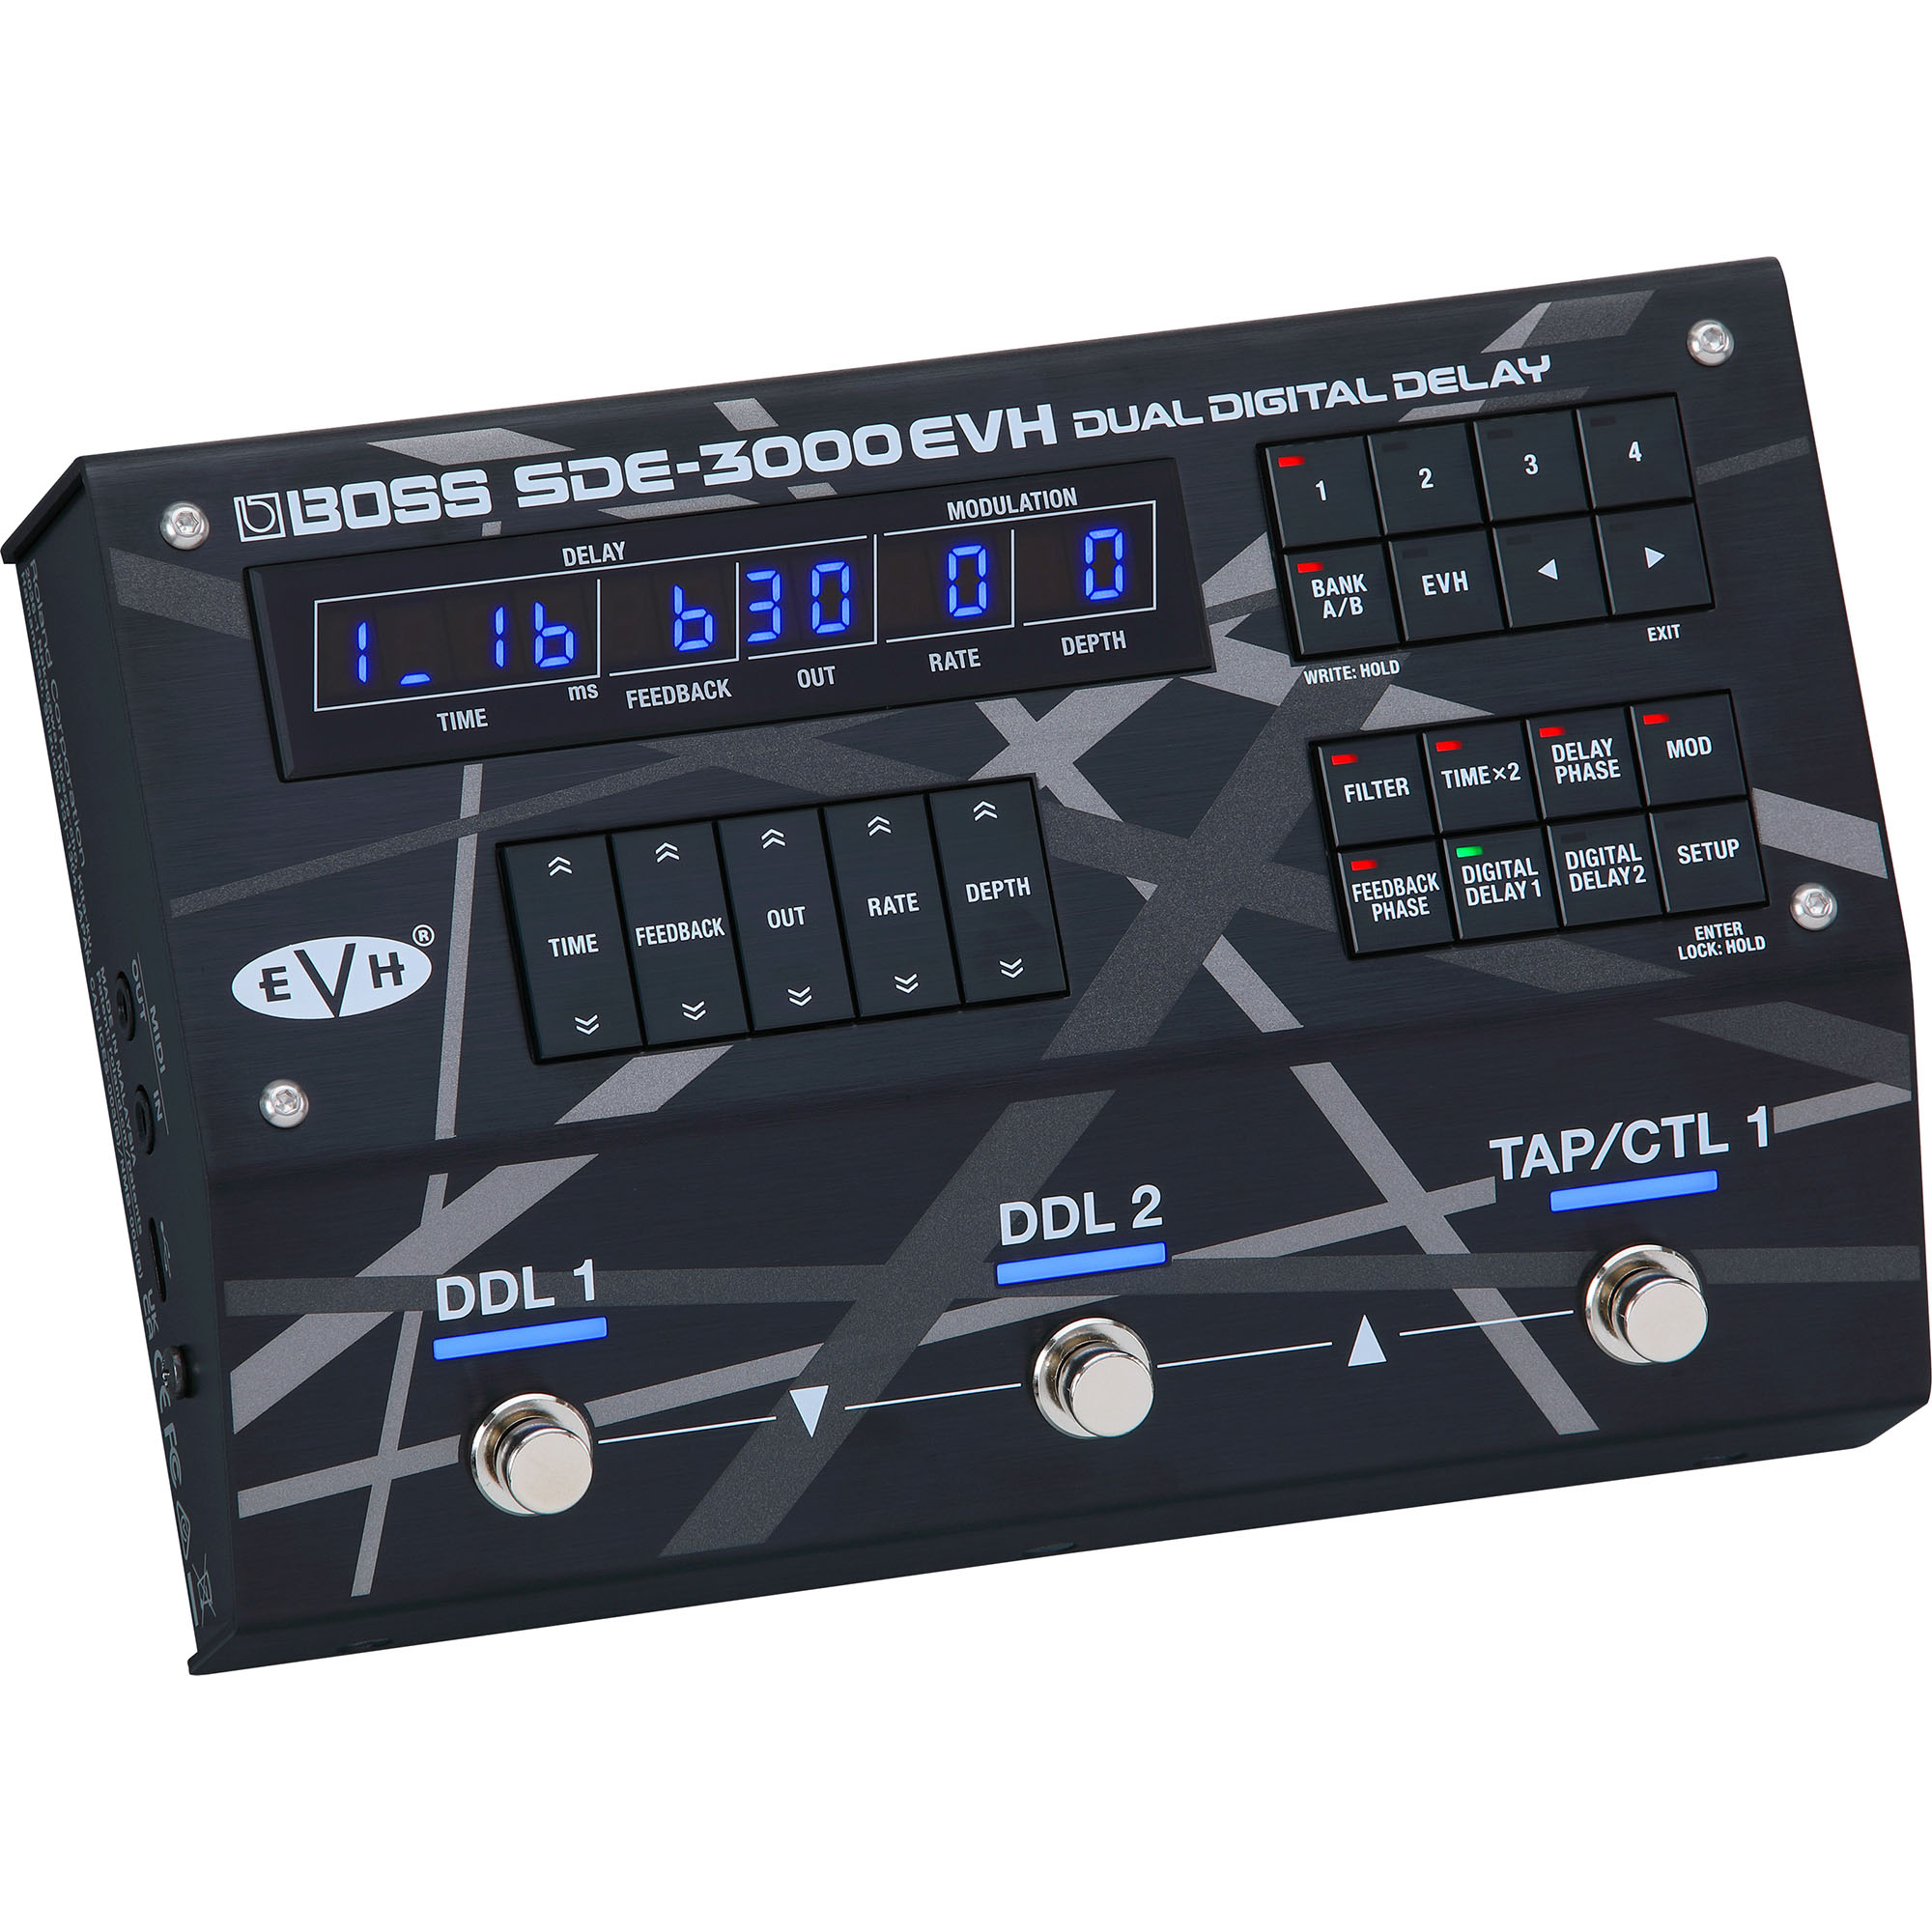 Boss Sde-3000-evh Eddie Van Halen Edition - Reverb, delay & echo effect pedal - Variation 1